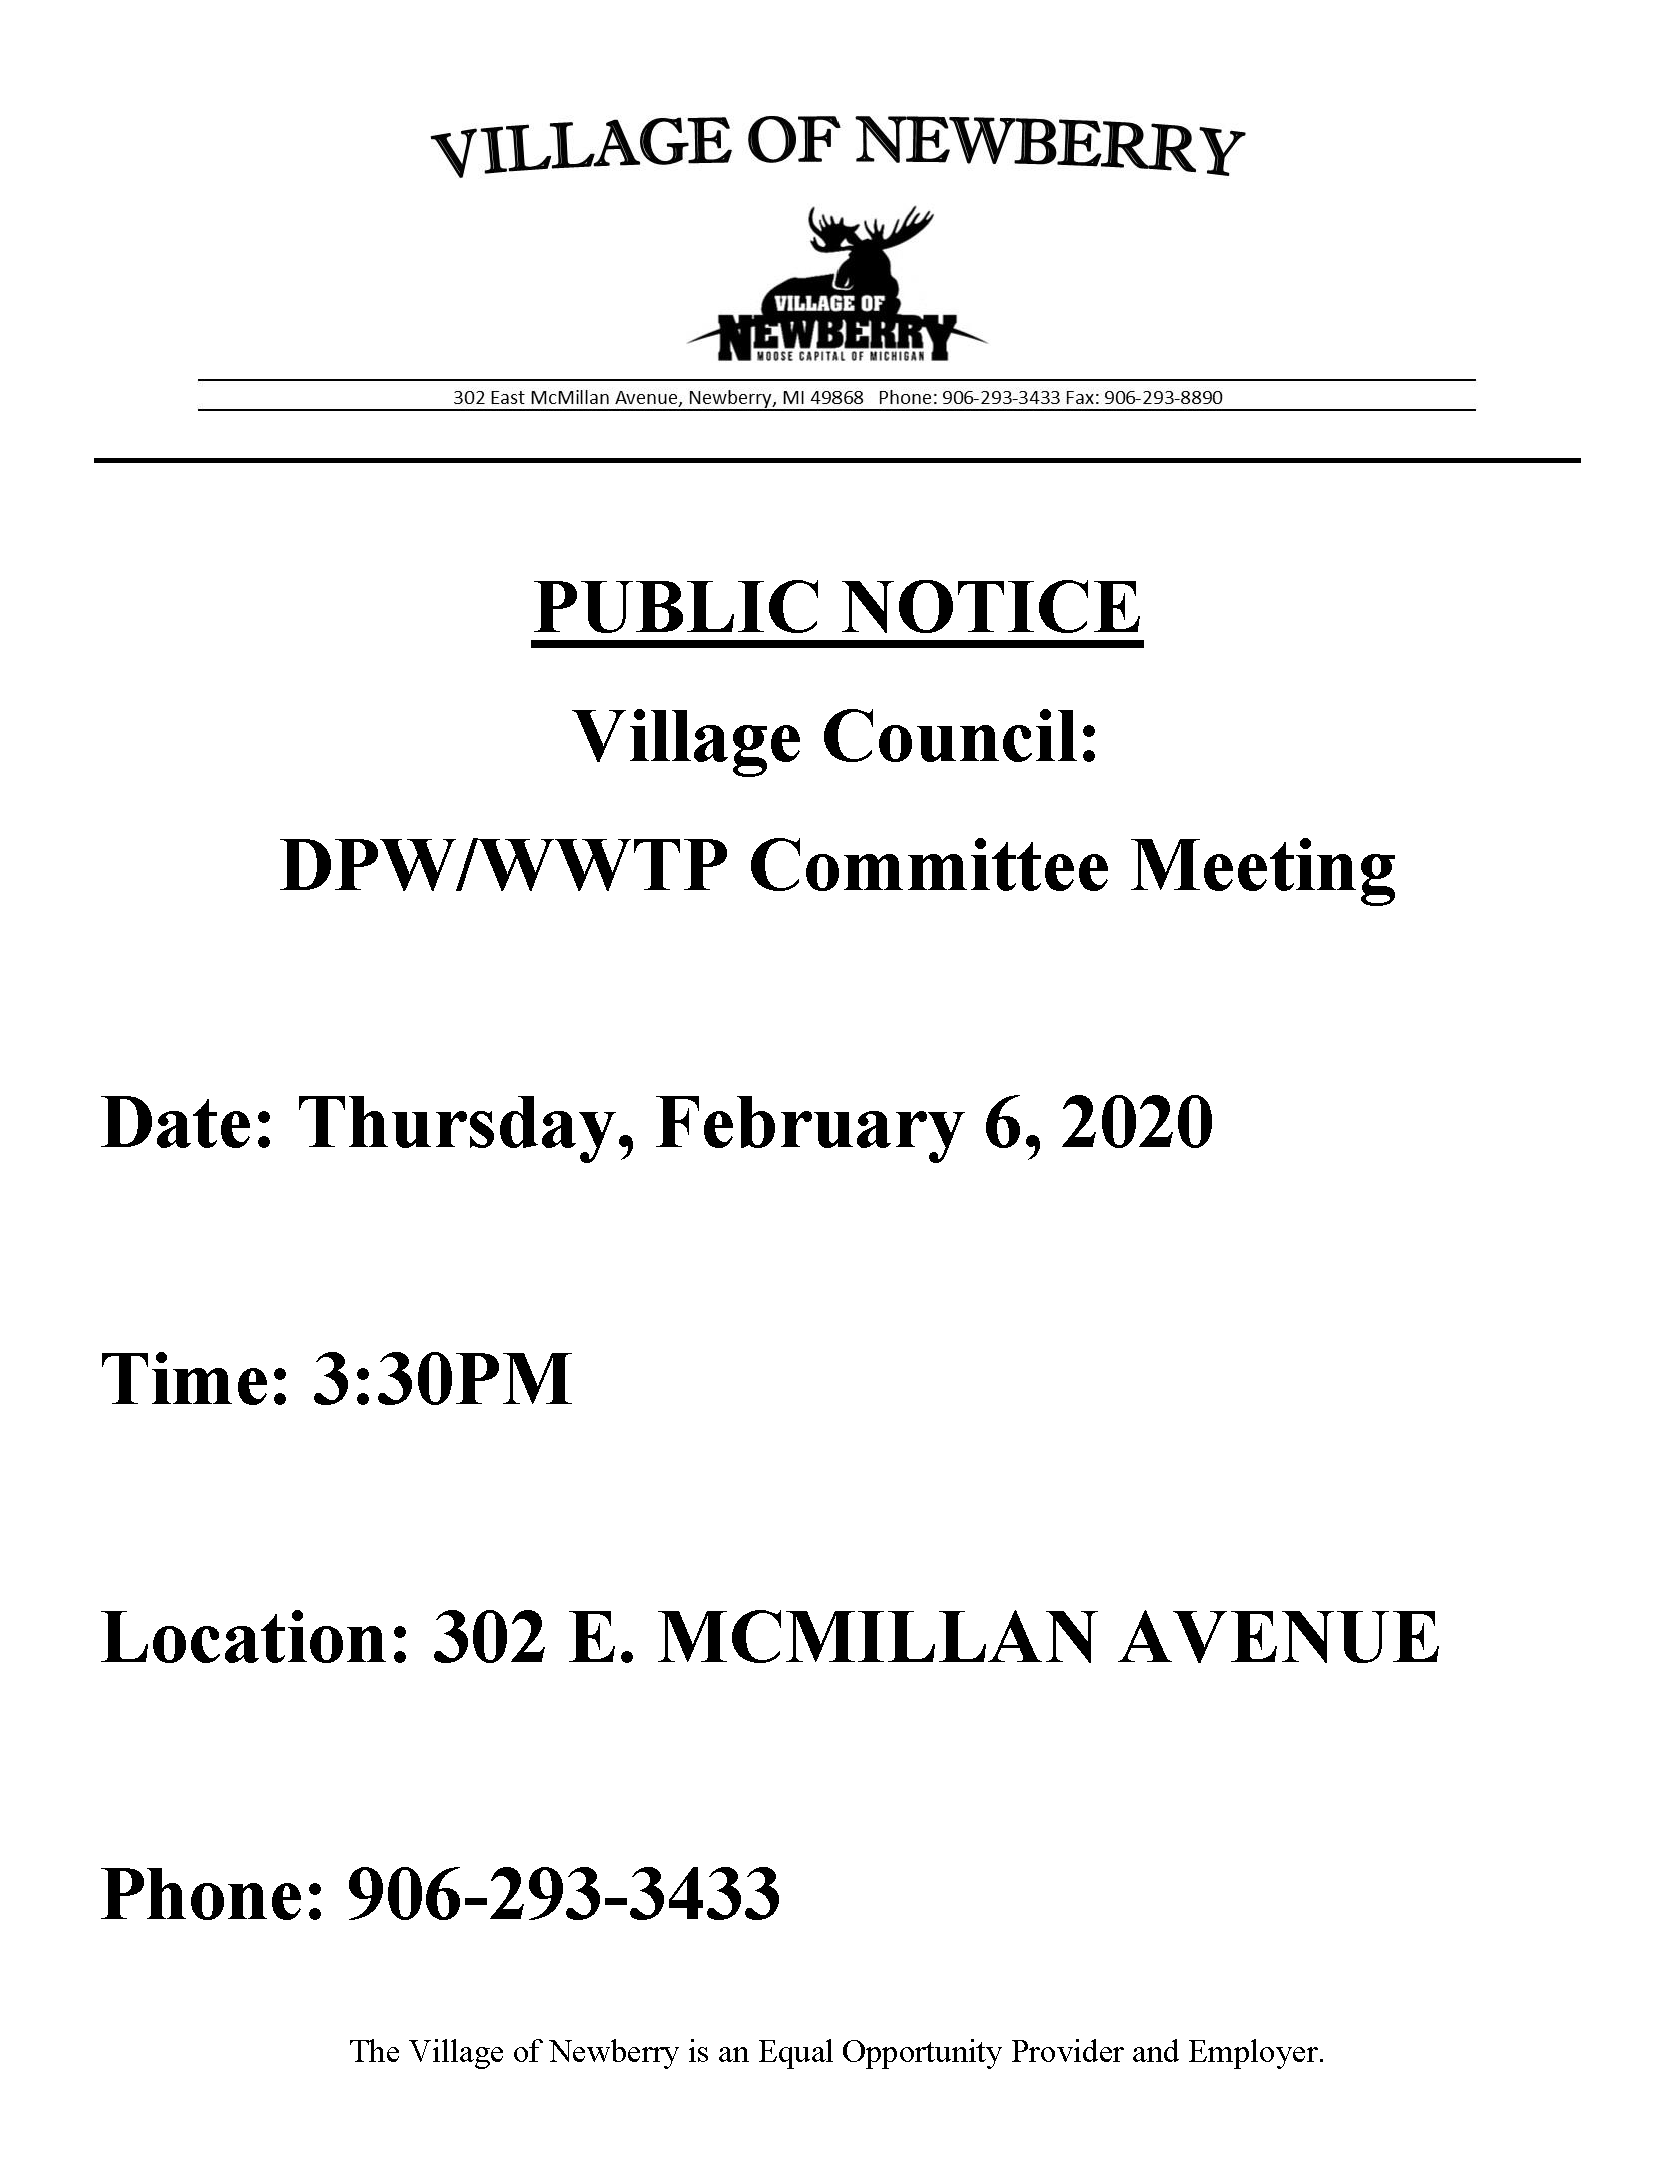 DPWCOMMITTEE__Meeting_notice_2.6.2020